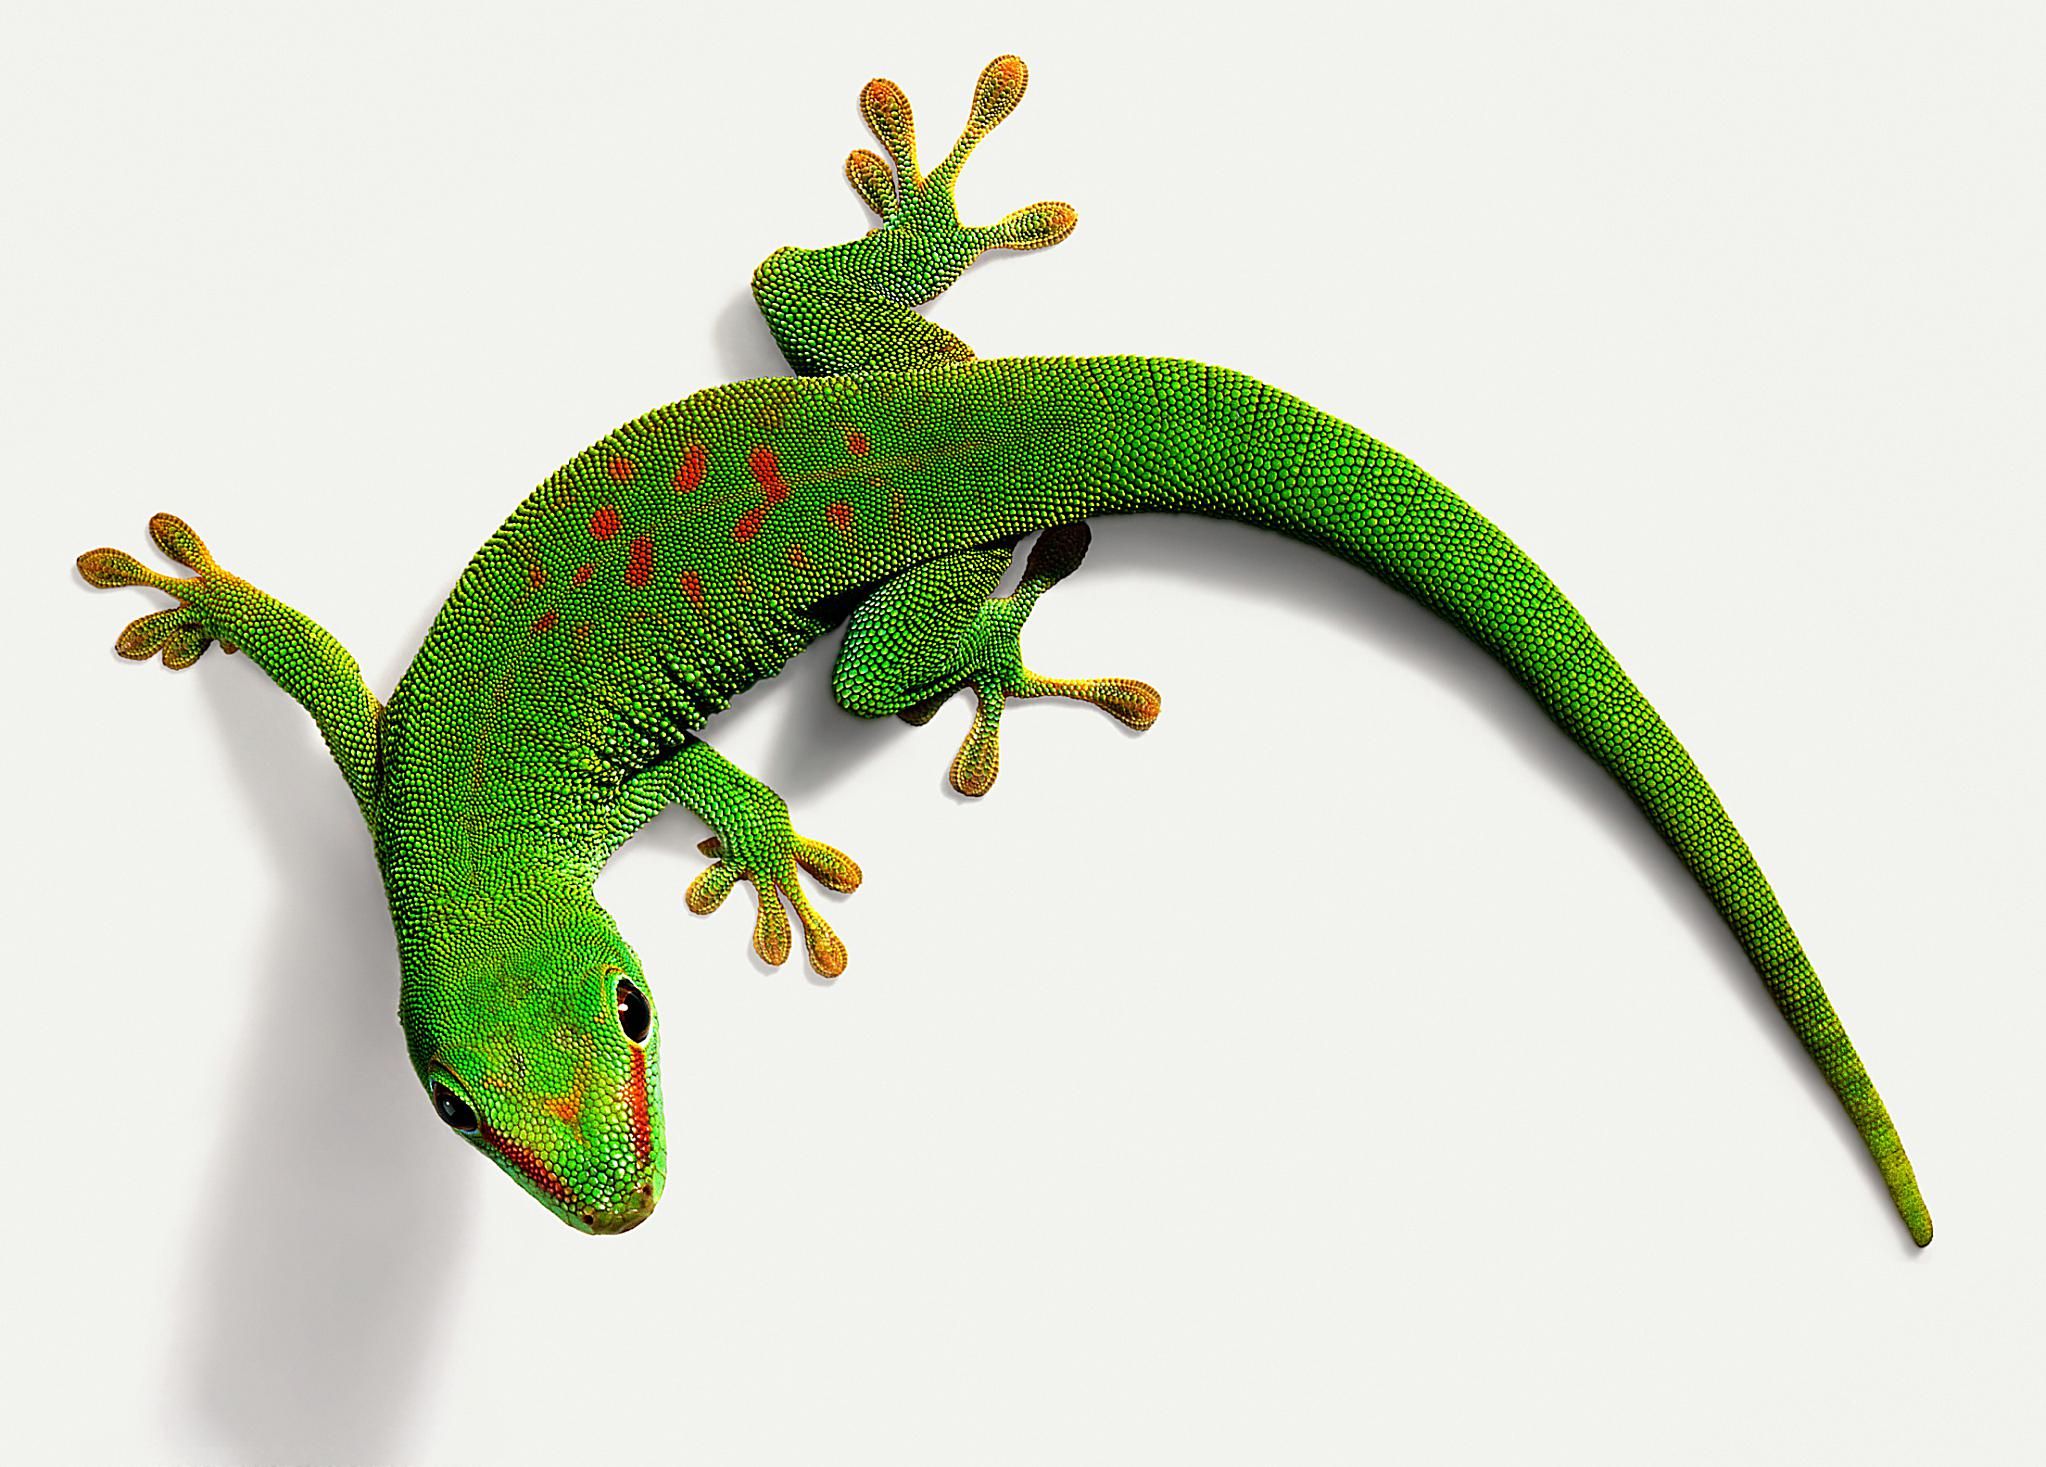 Gecko HD wallpapers, Desktop wallpaper - most viewed